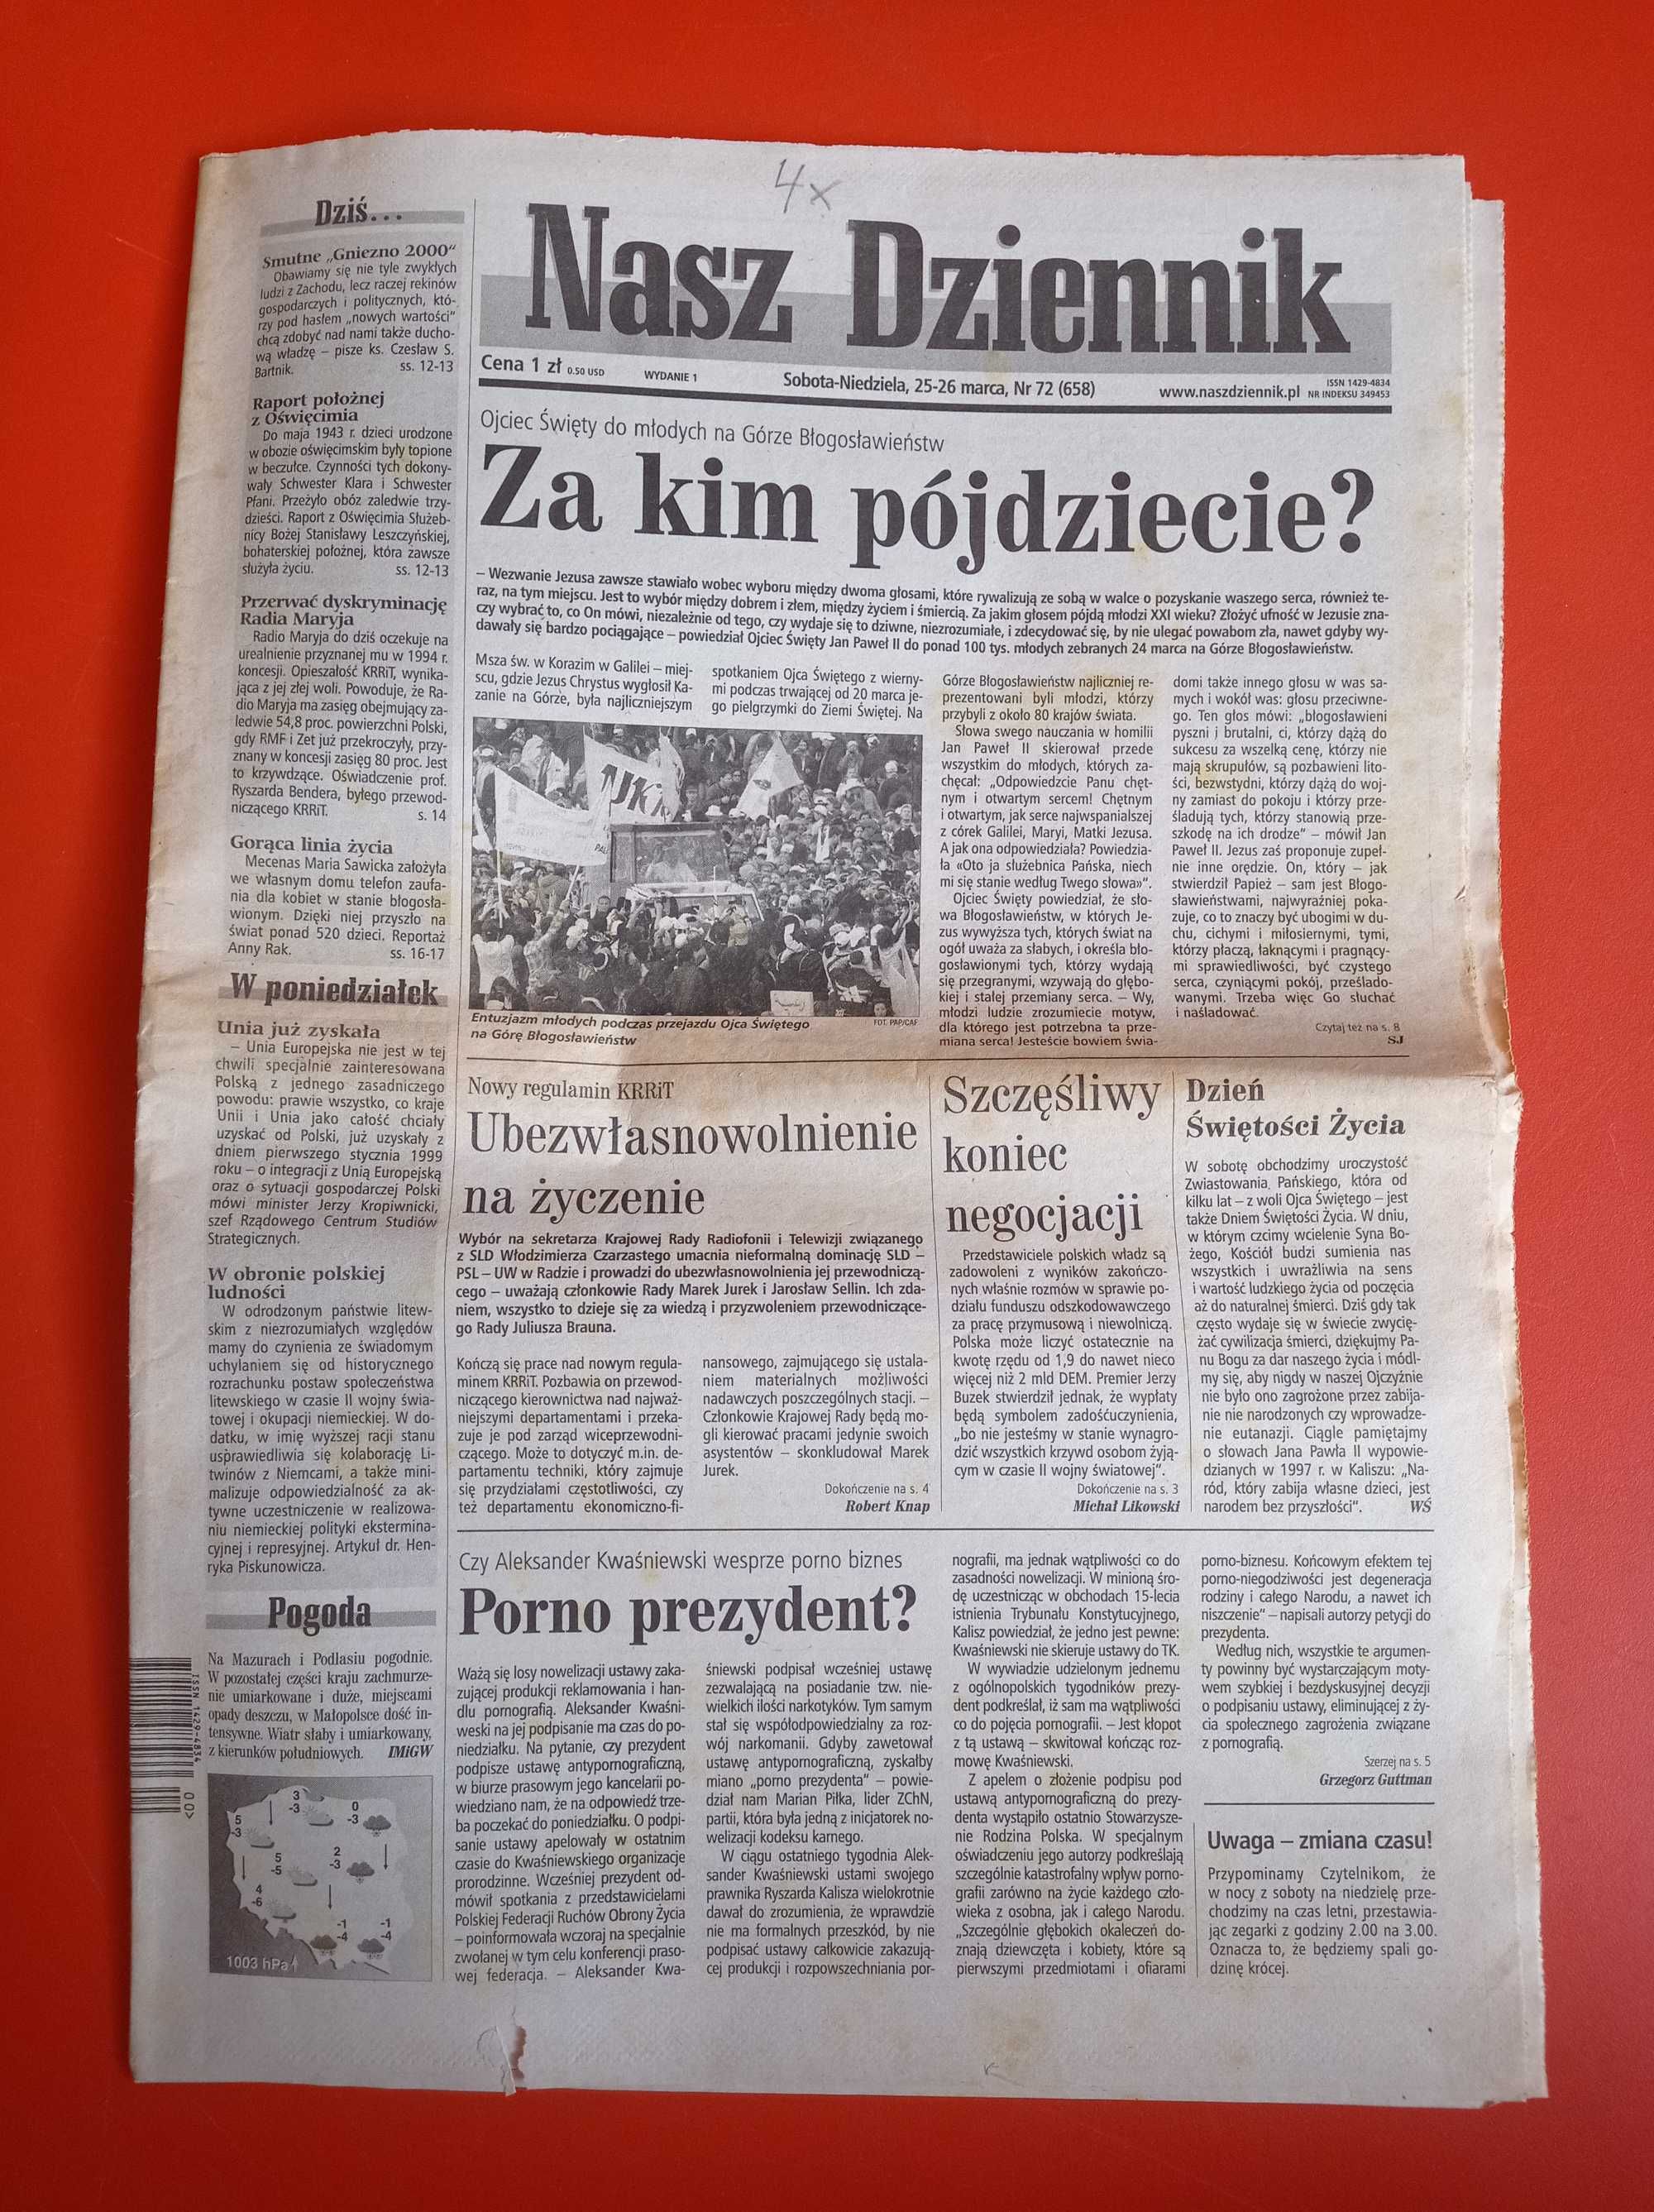 Nasz Dziennik, nr 72/2000, 25-26 marca 2000